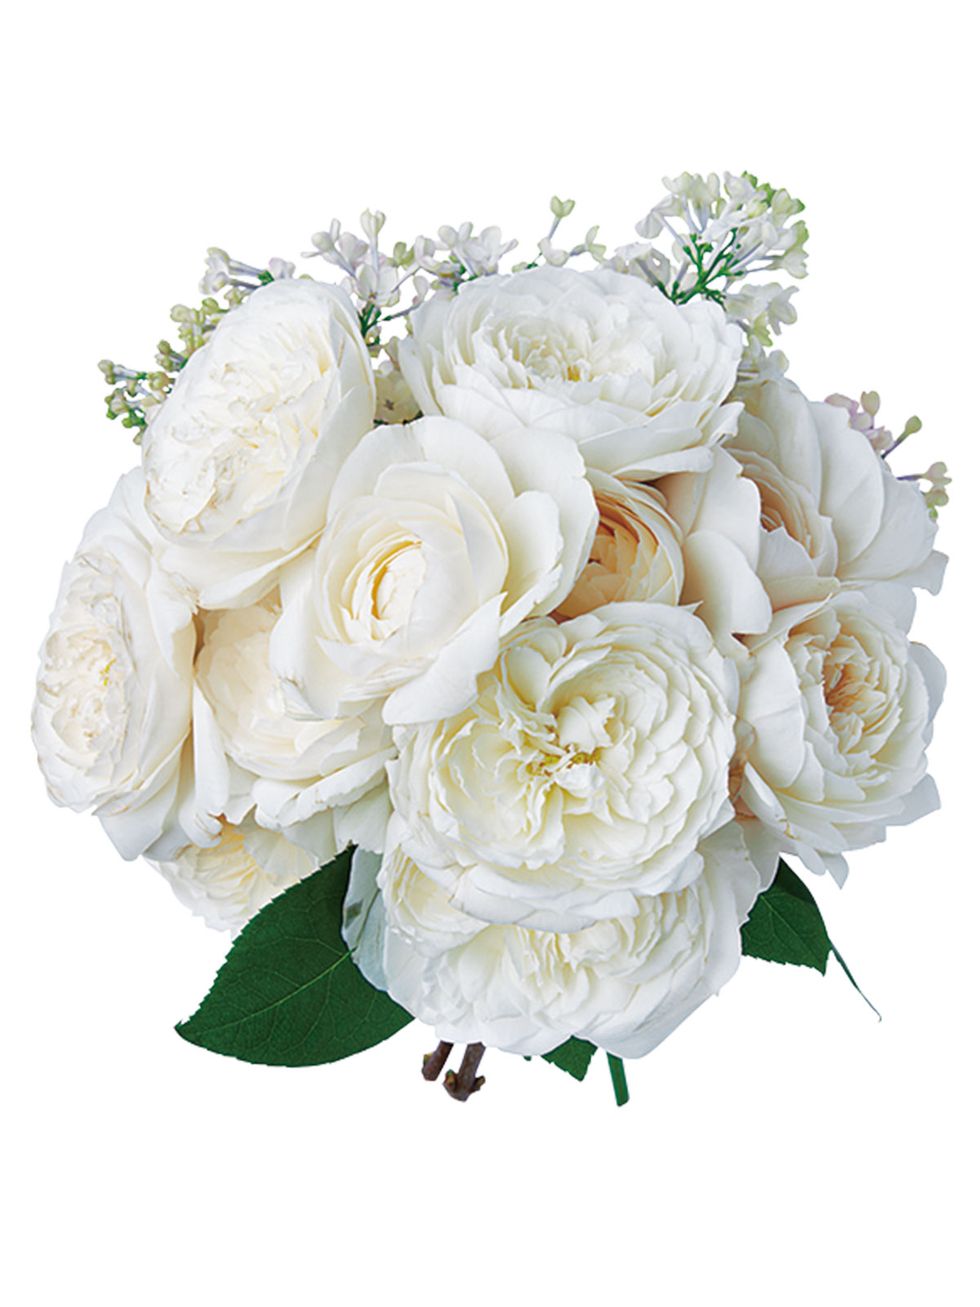 Flower, Petal, White, Cut flowers, Flowering plant, Bouquet, Rose family, Rose, Flower Arranging, Rose order, 